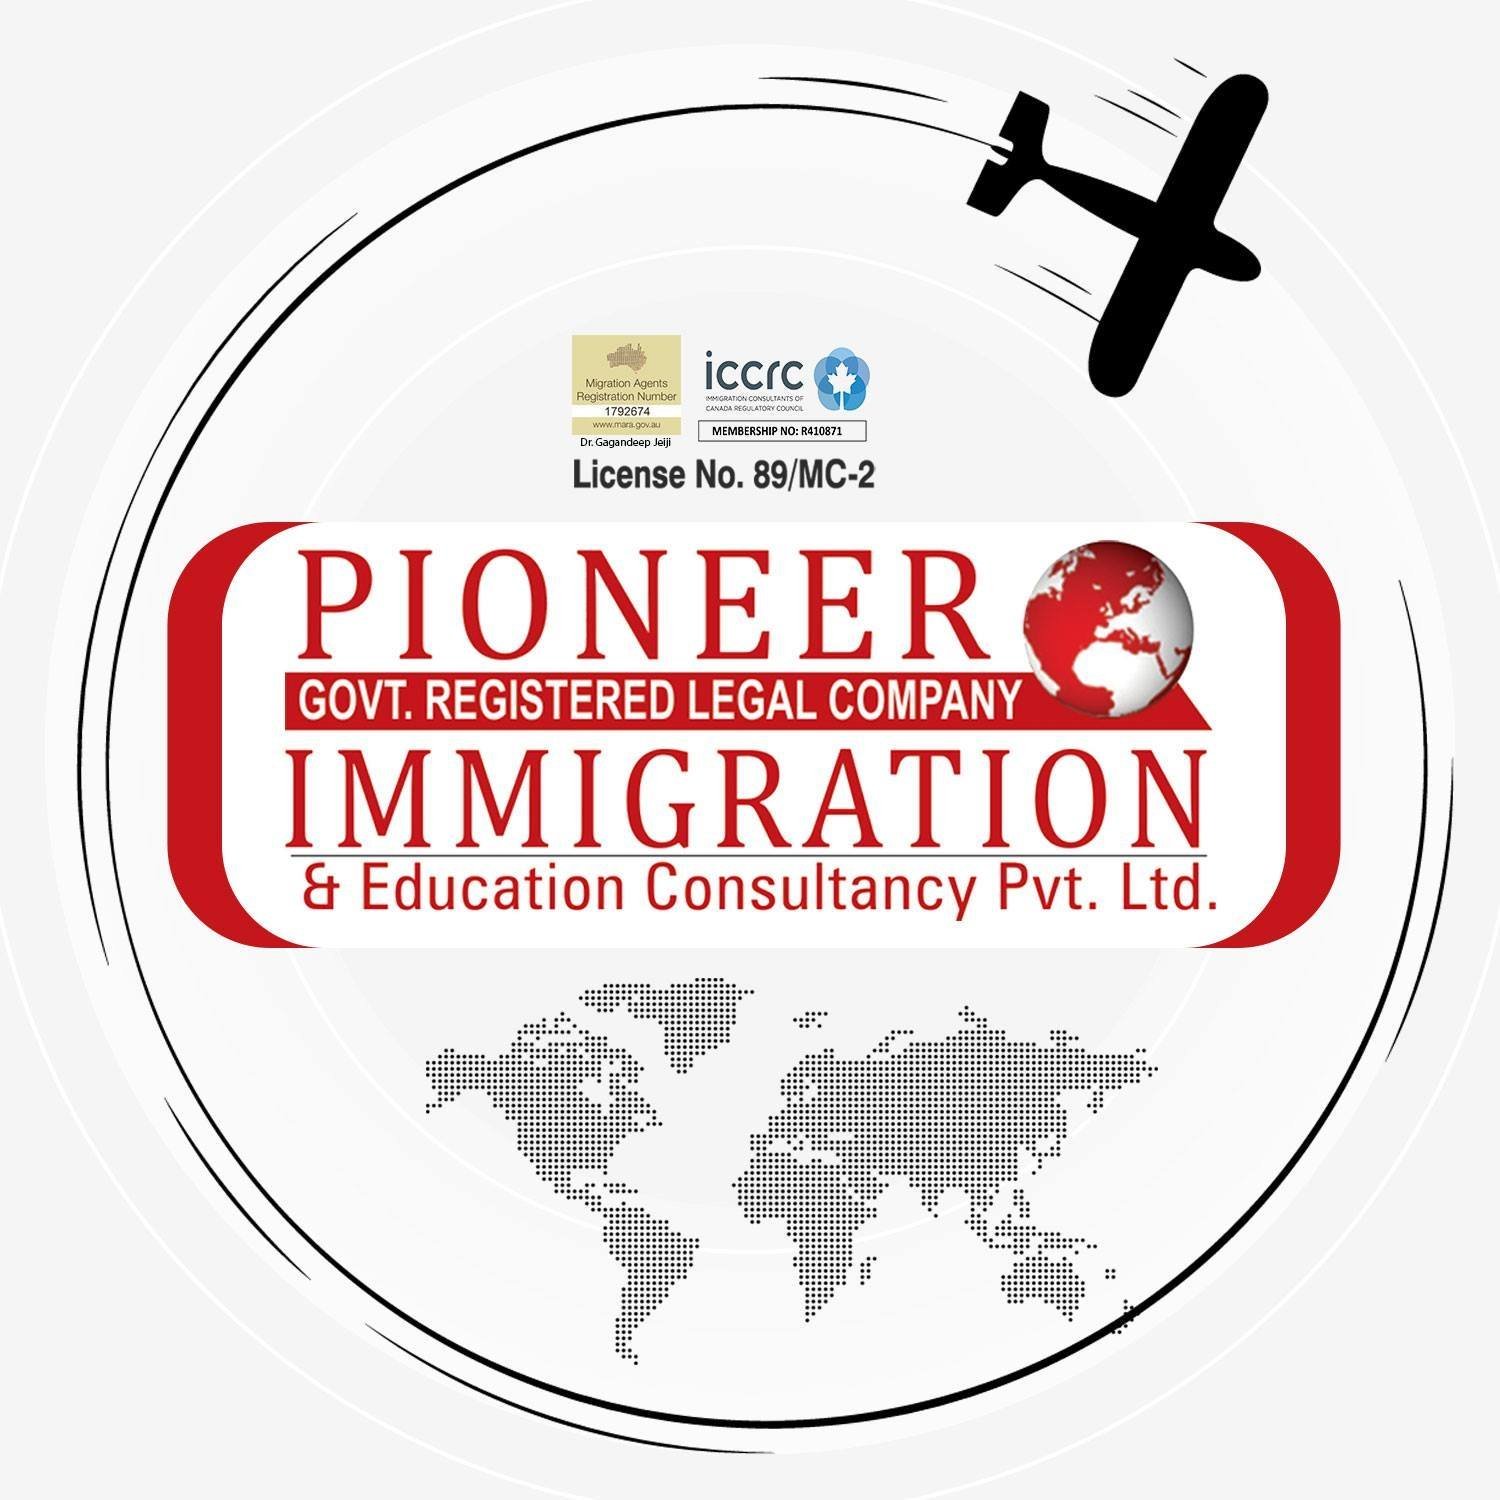 goyal travel & immigration pvt ltd